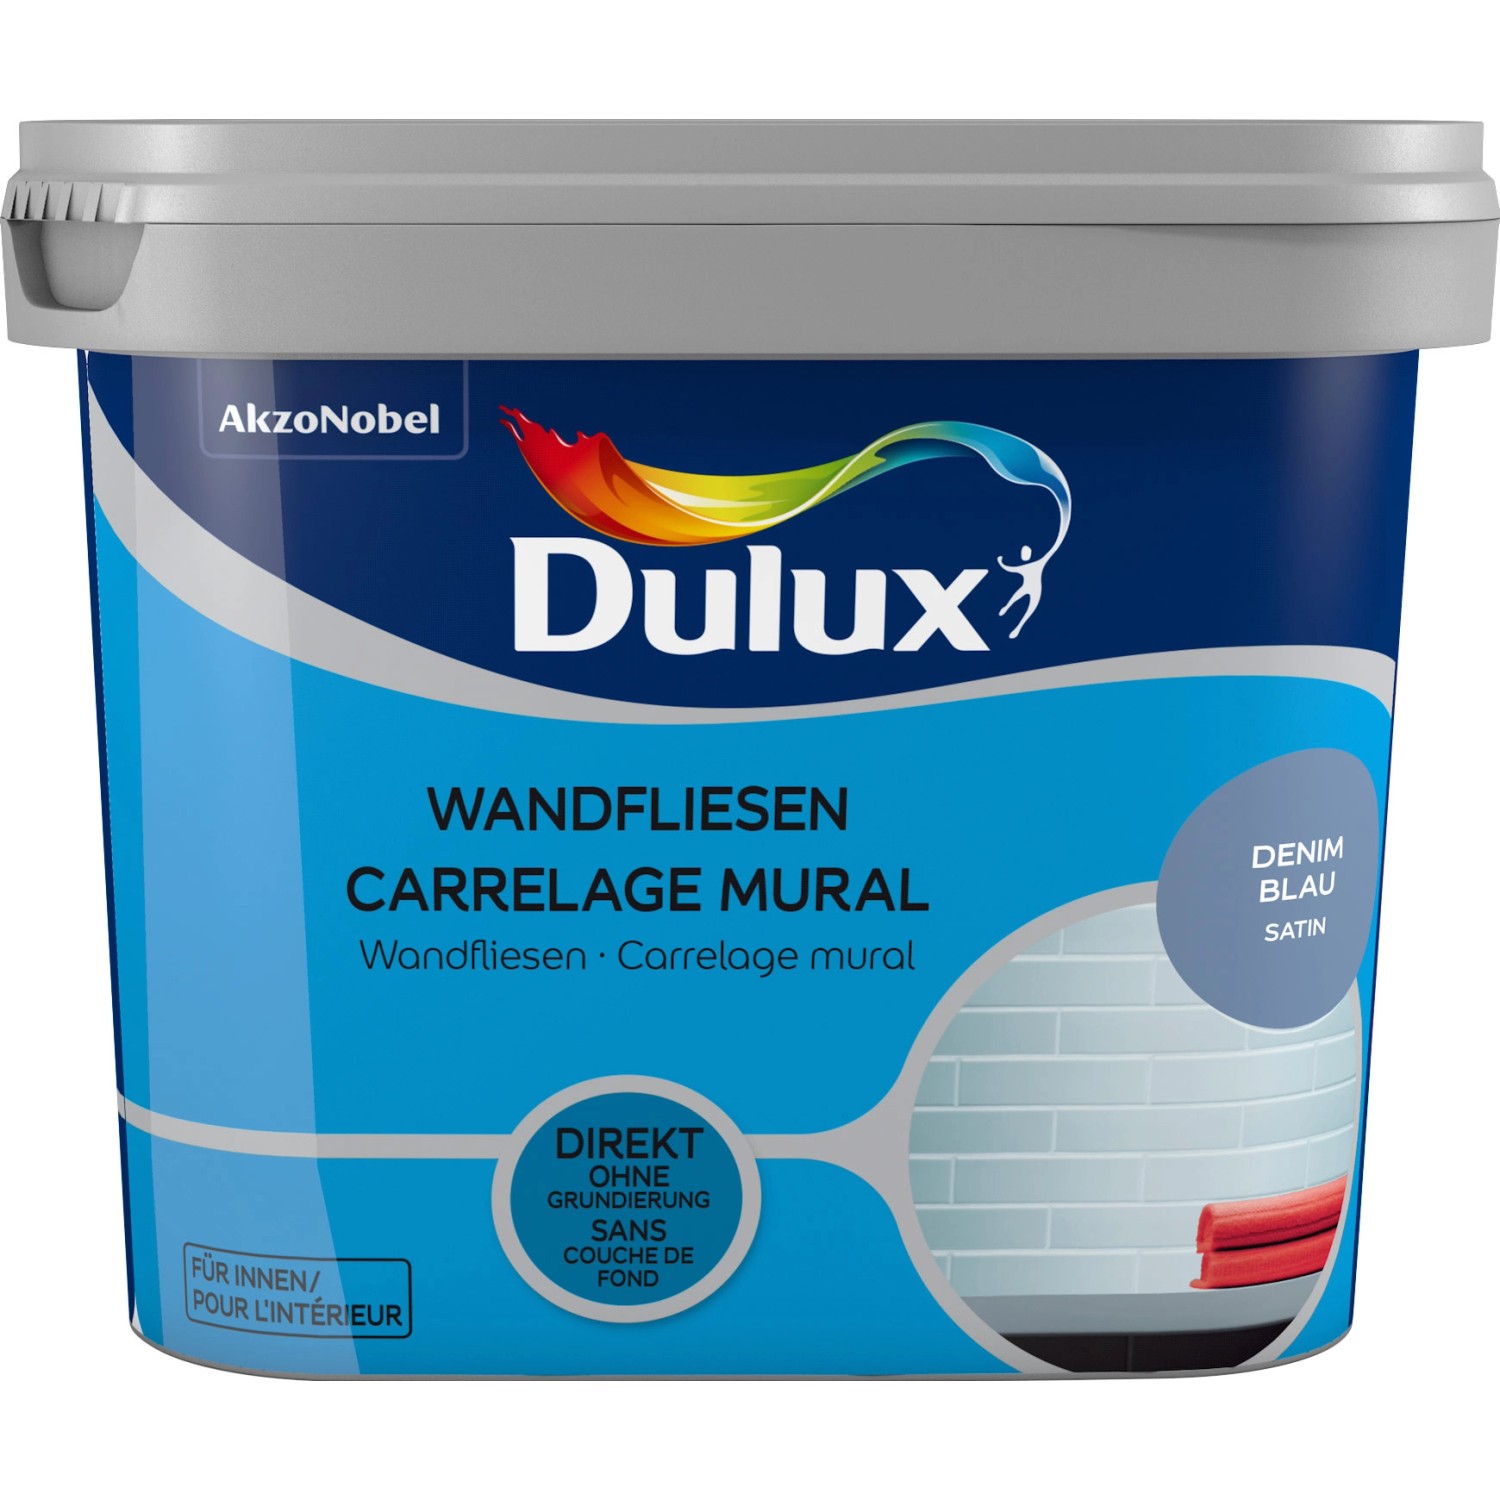 Dulux Fresh Up Wandfliesenlack Satin Denim Blue 750 ml